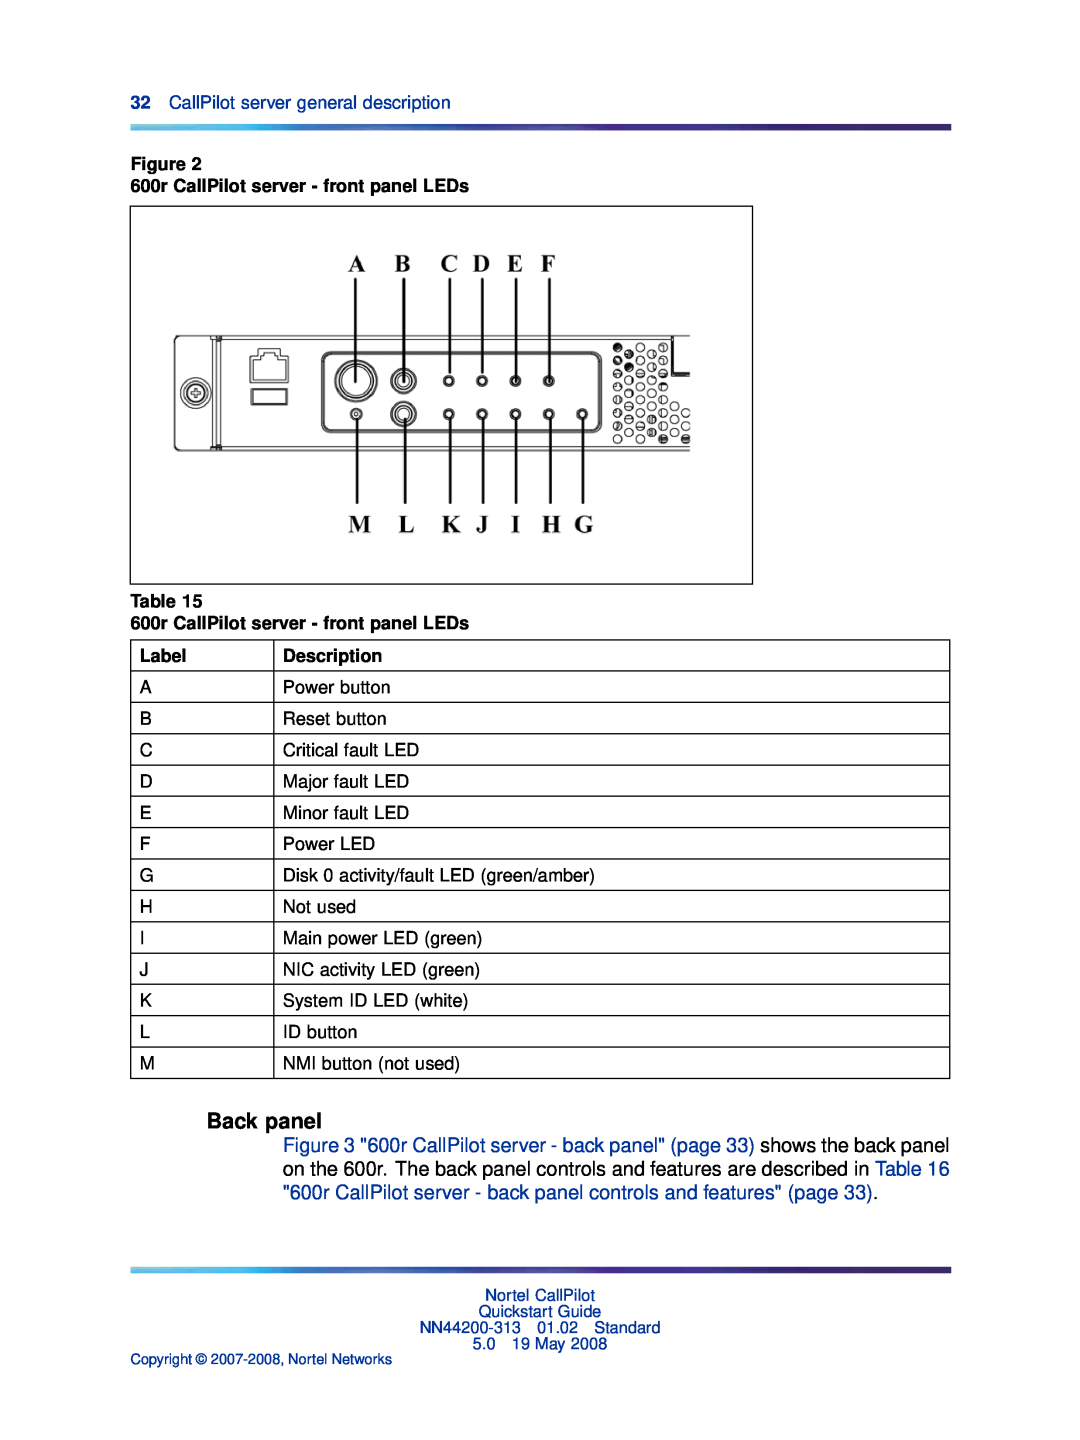 Nortel Networks NN44200-313 quick start Back panel, CallPilot server general description 